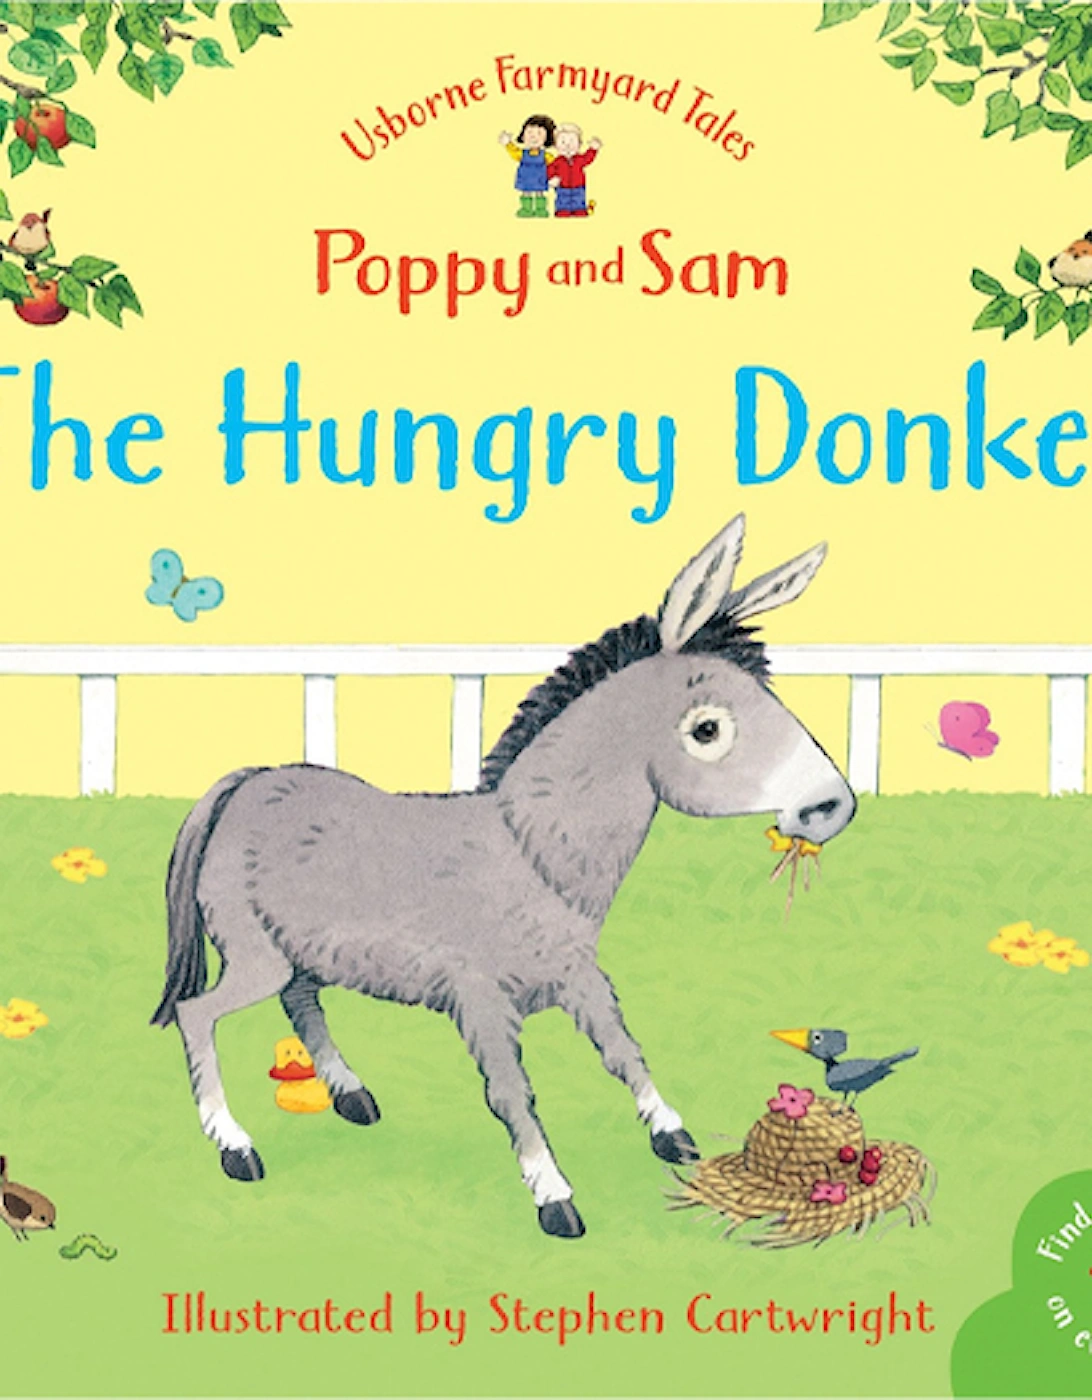 Farmyard Tales Poppy and Sam: The Hungry Donkey, 2 of 1